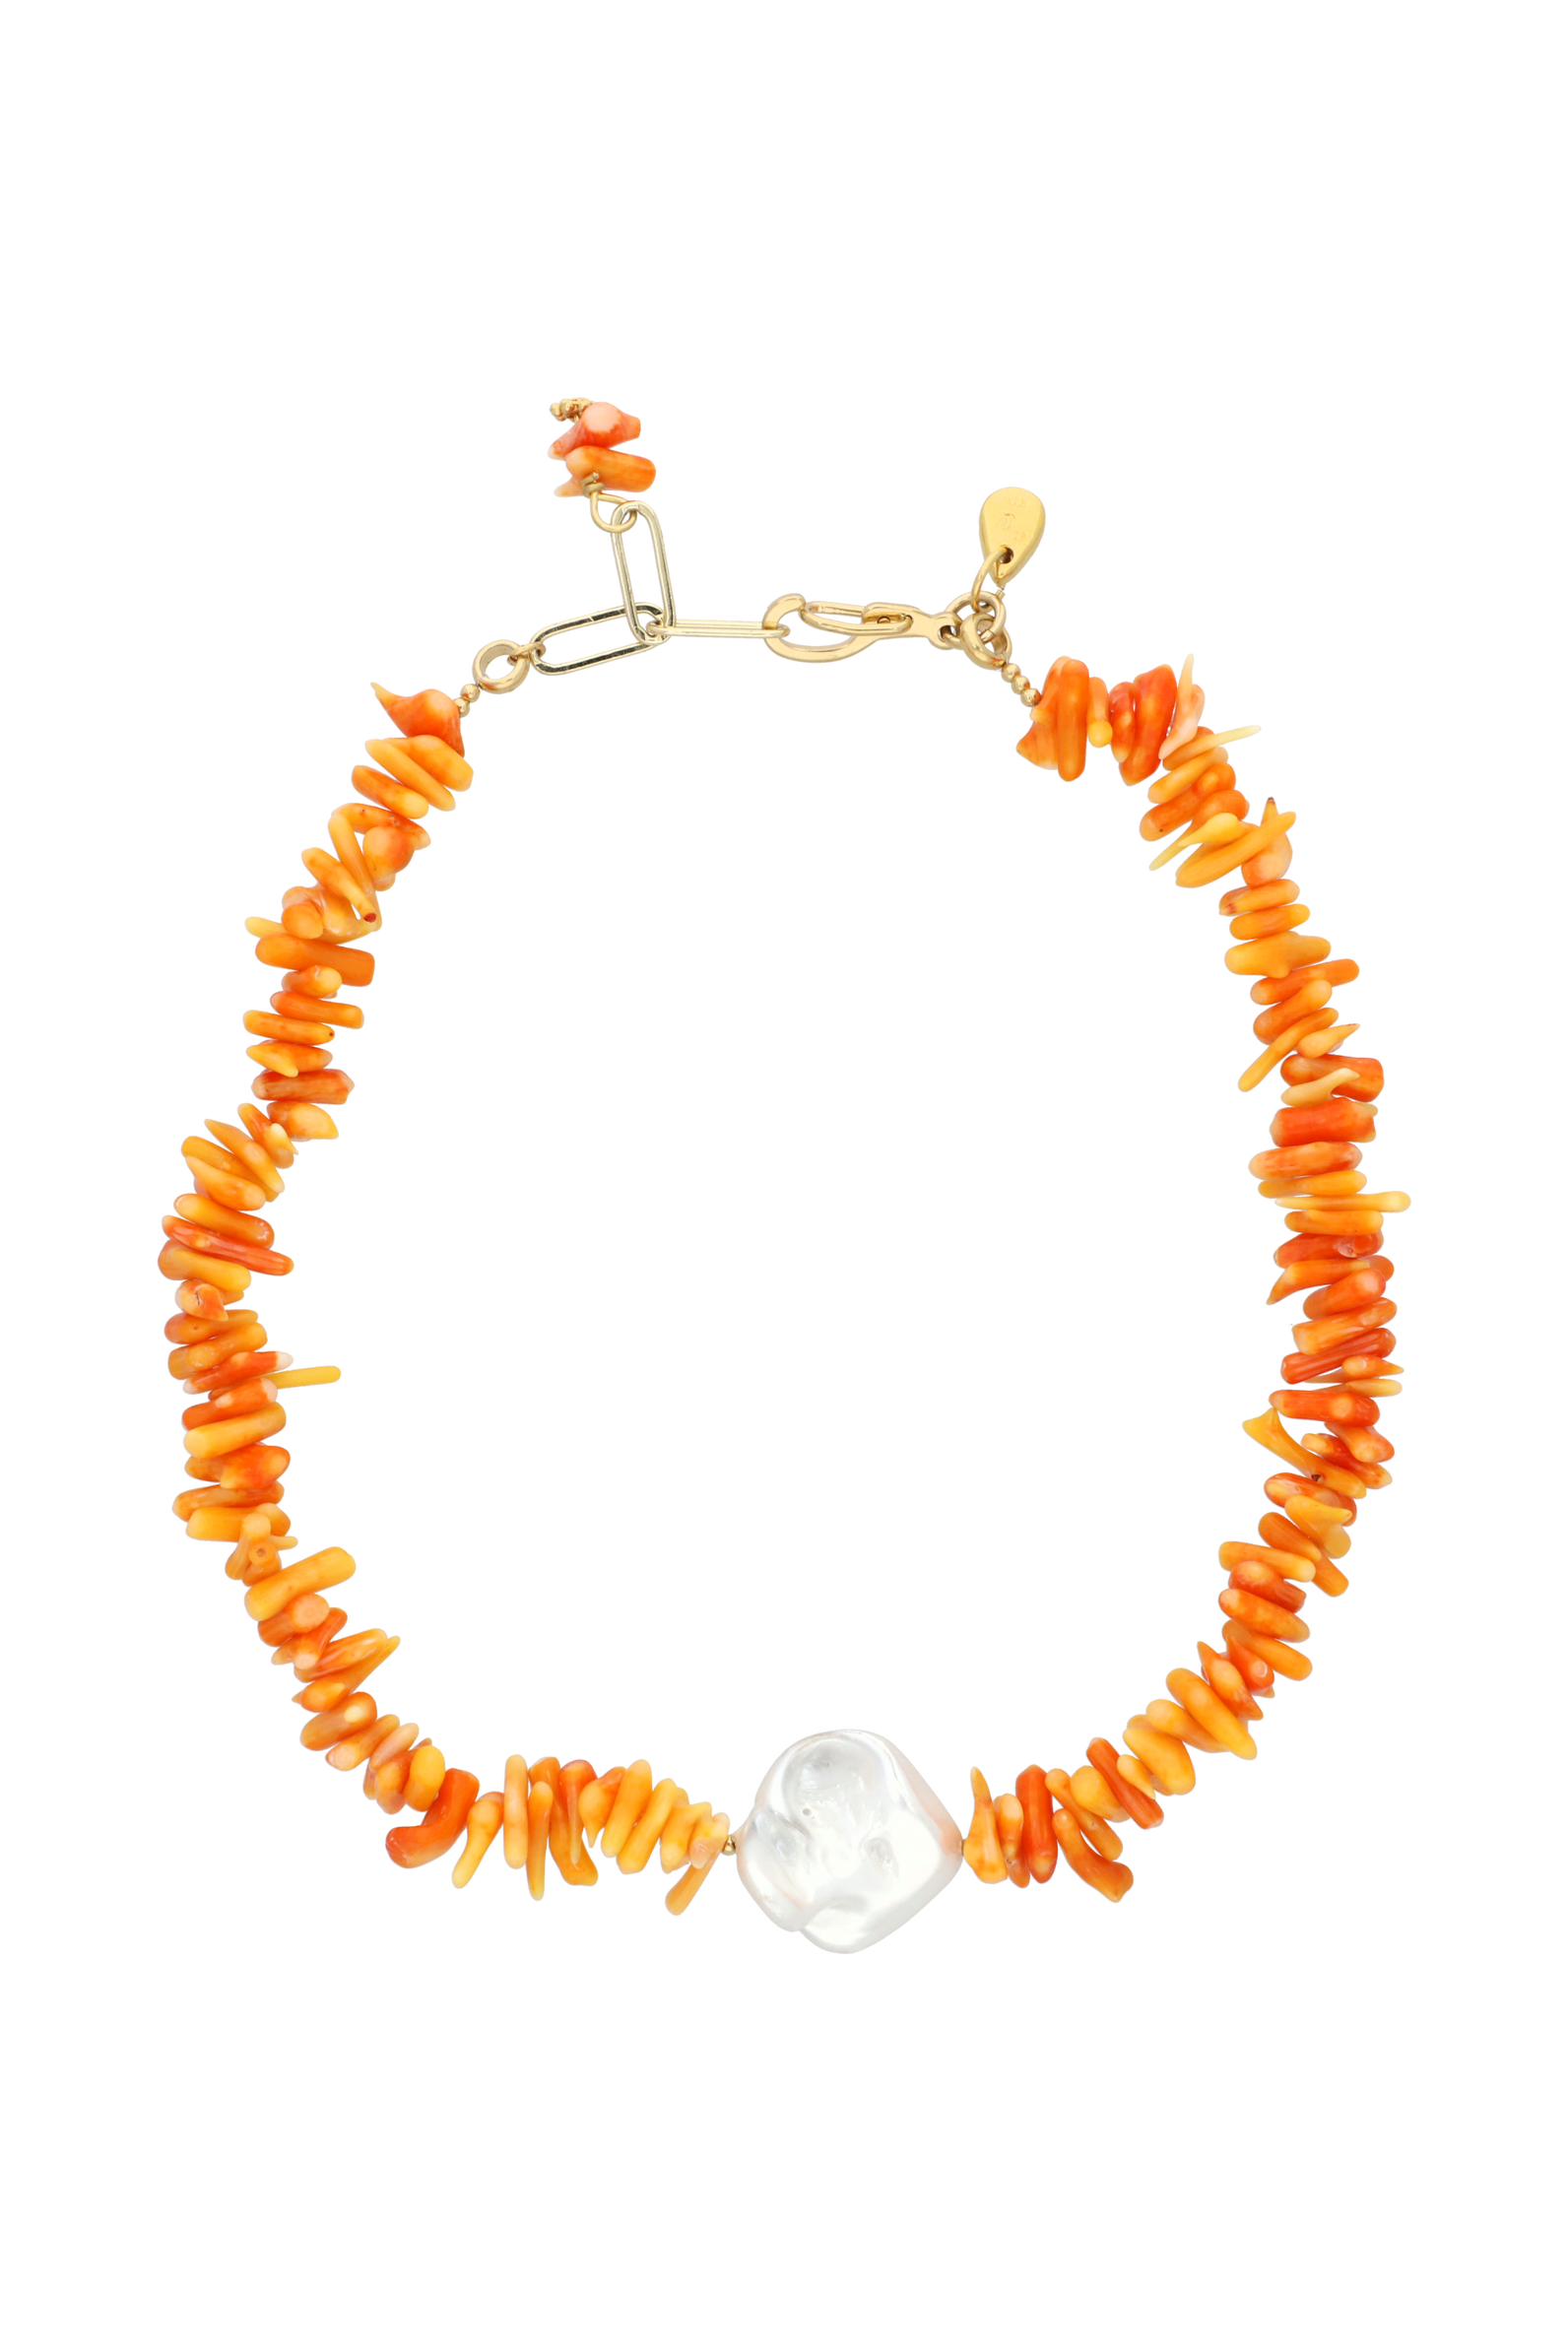 Chicatana necklaces